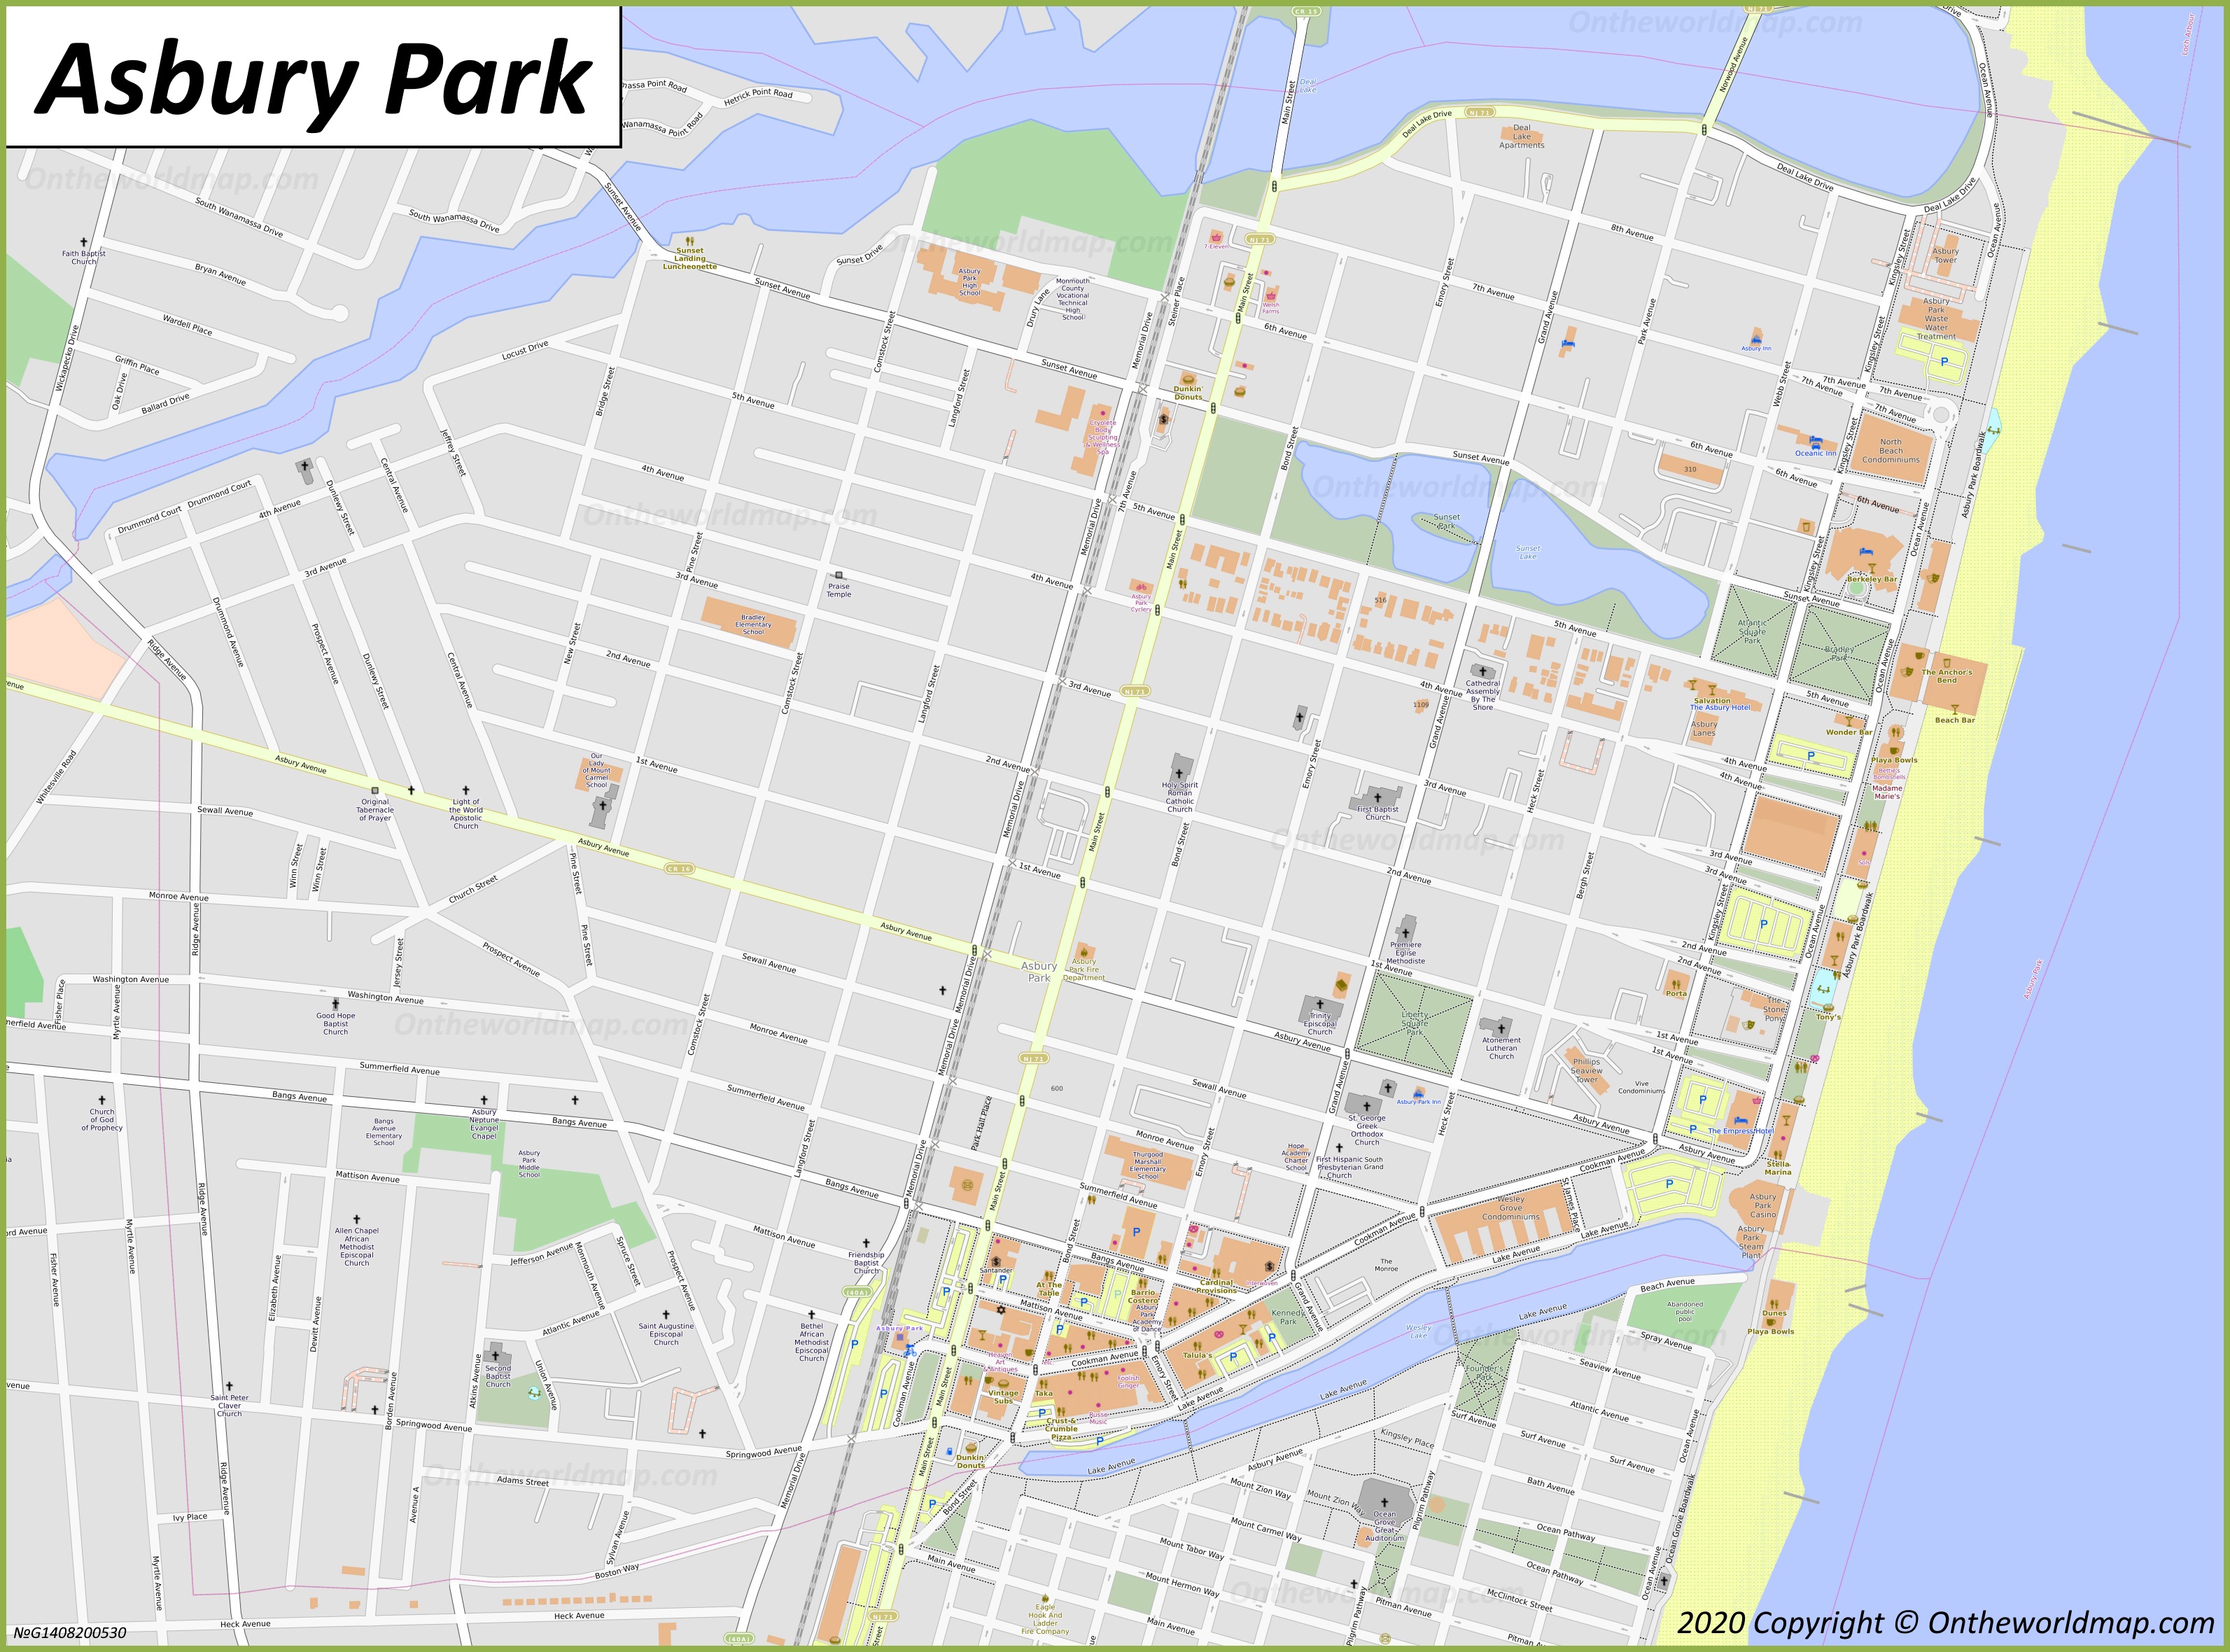 Asbury Park Map | vlr.eng.br